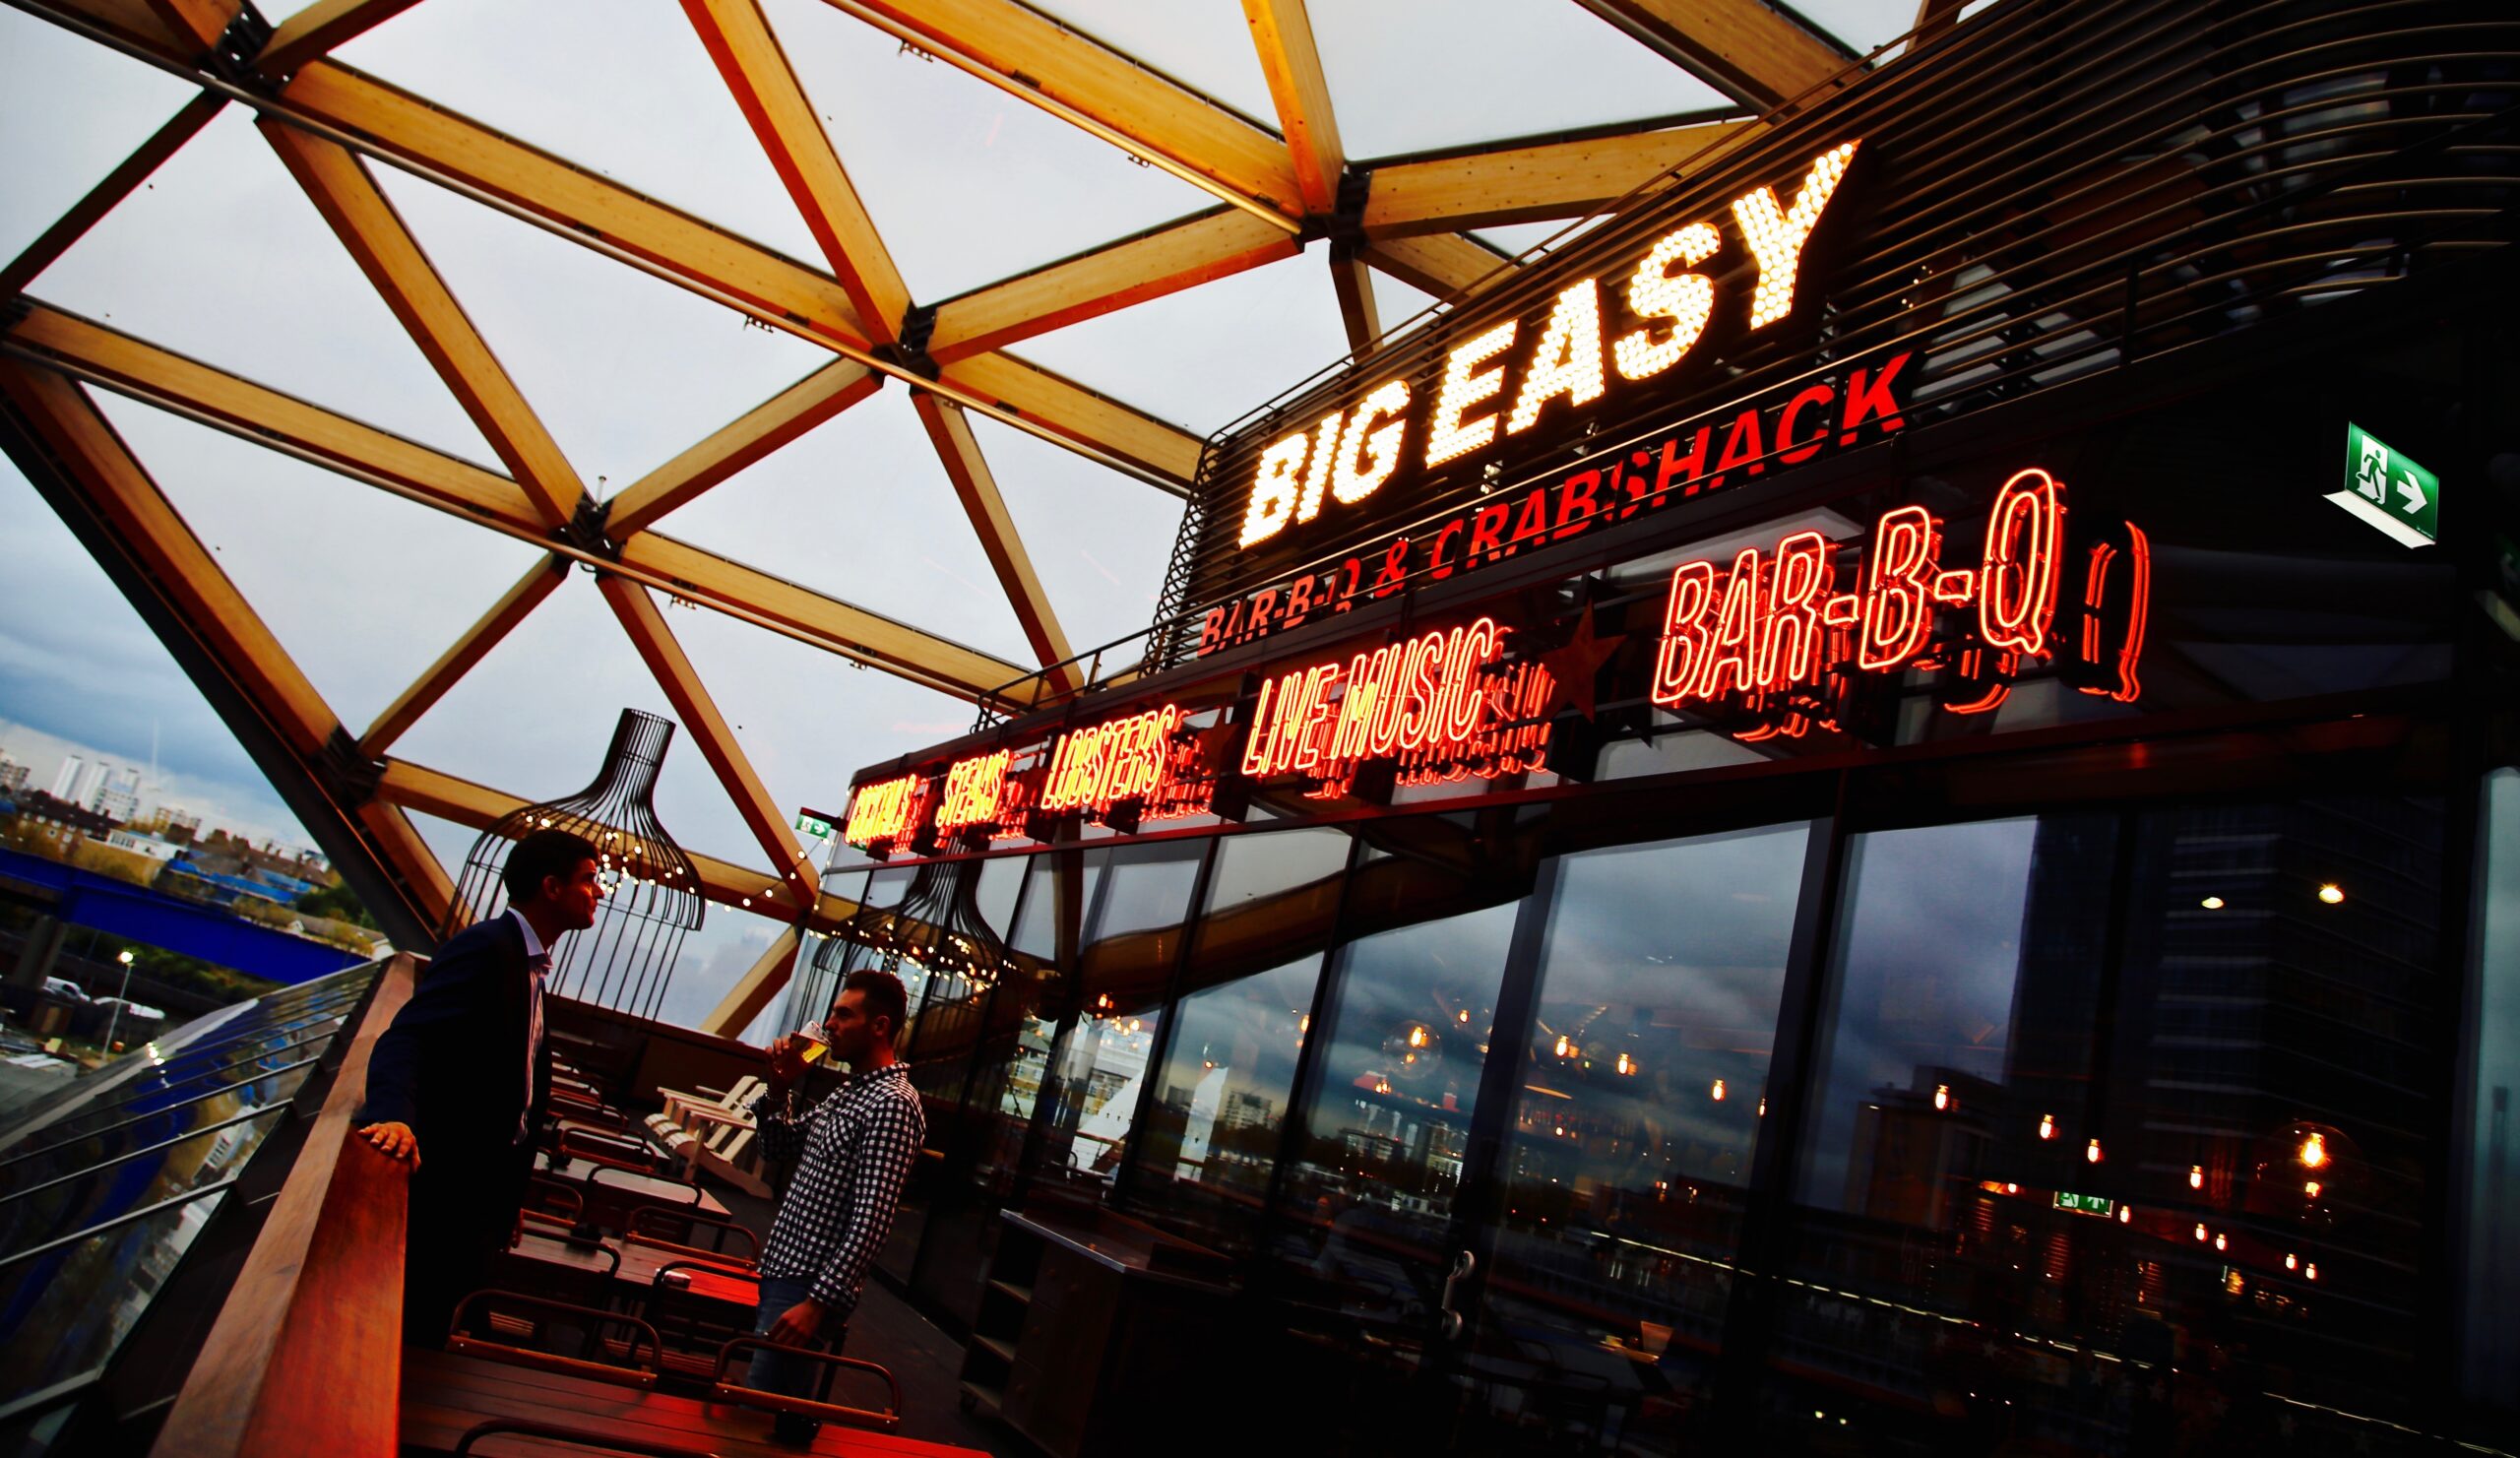 Big Easy - Neon and backlit signage